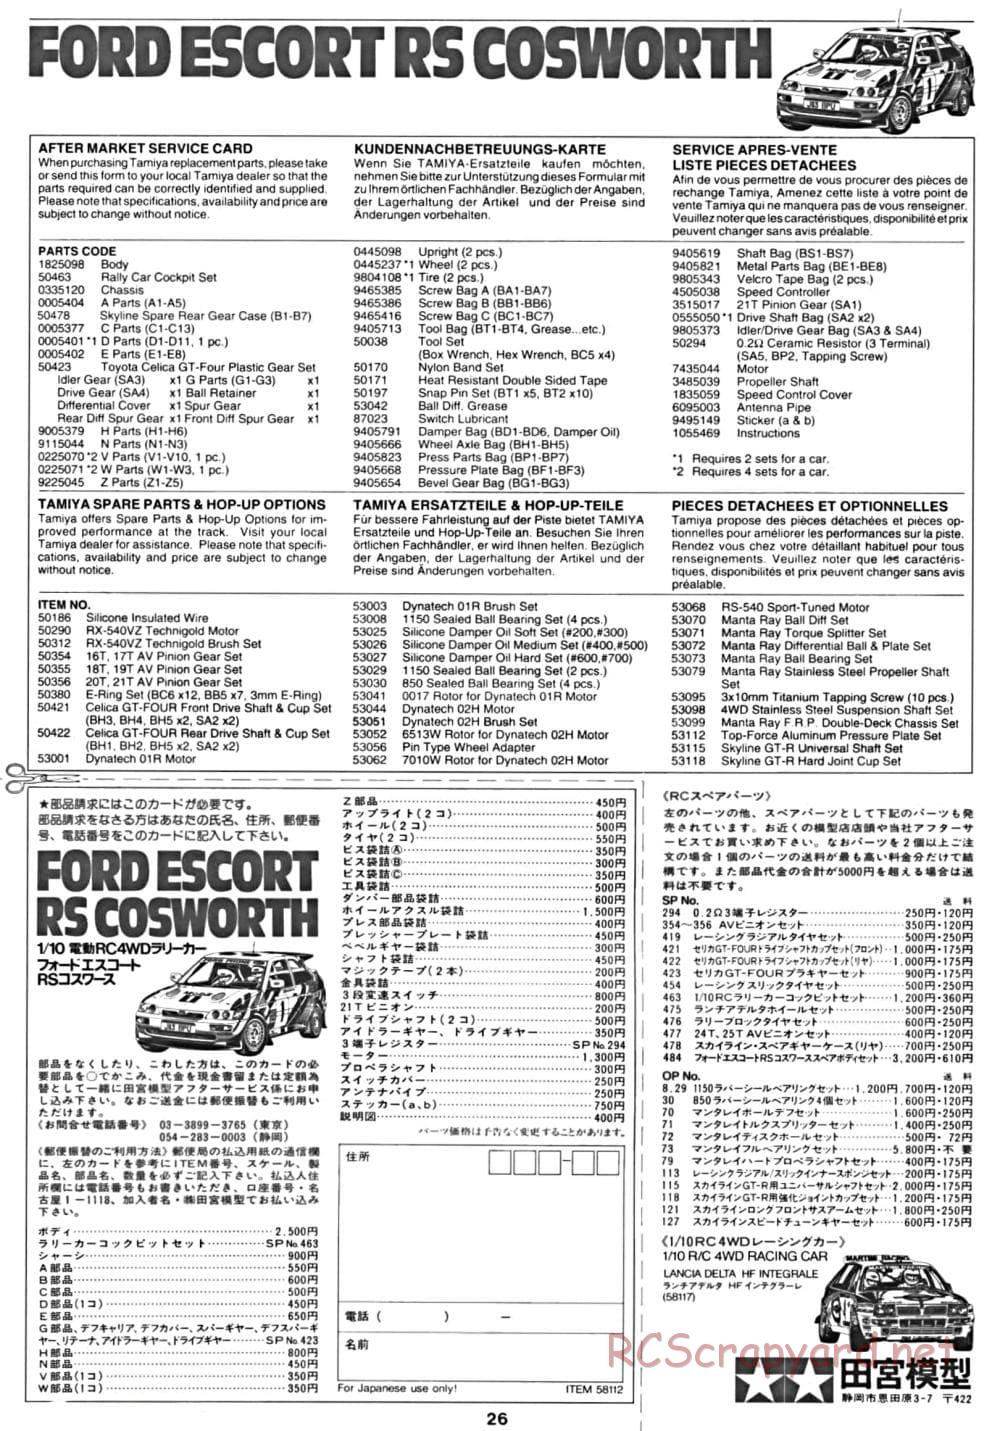 Tamiya - Ford Escort RS Cosworth - TA-01 Chassis - Manual - Page 26